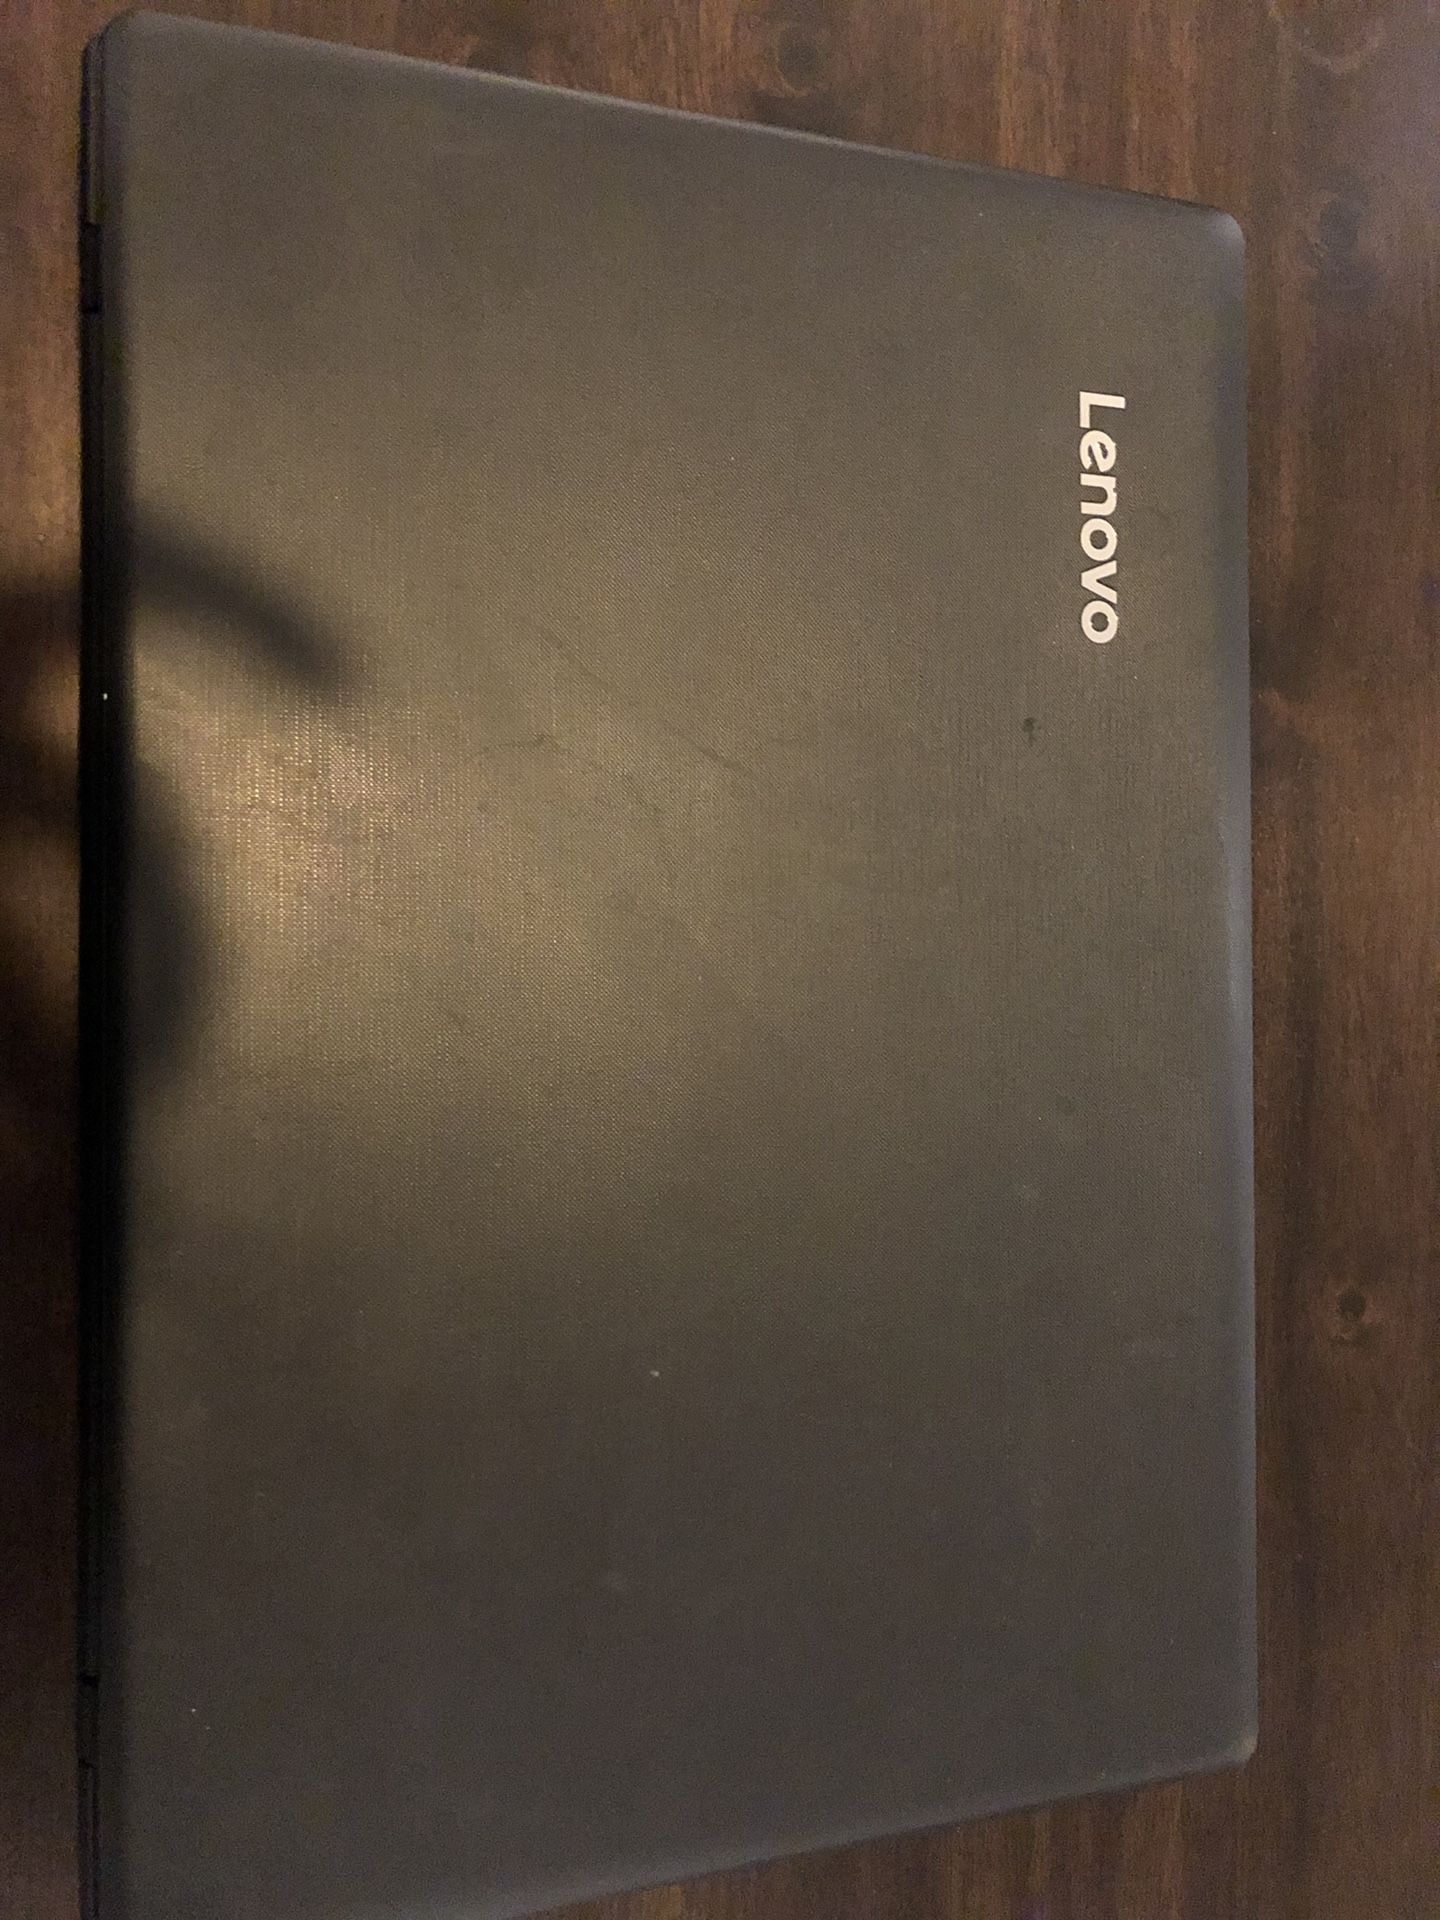 Lenovo Laptop (Great for school)